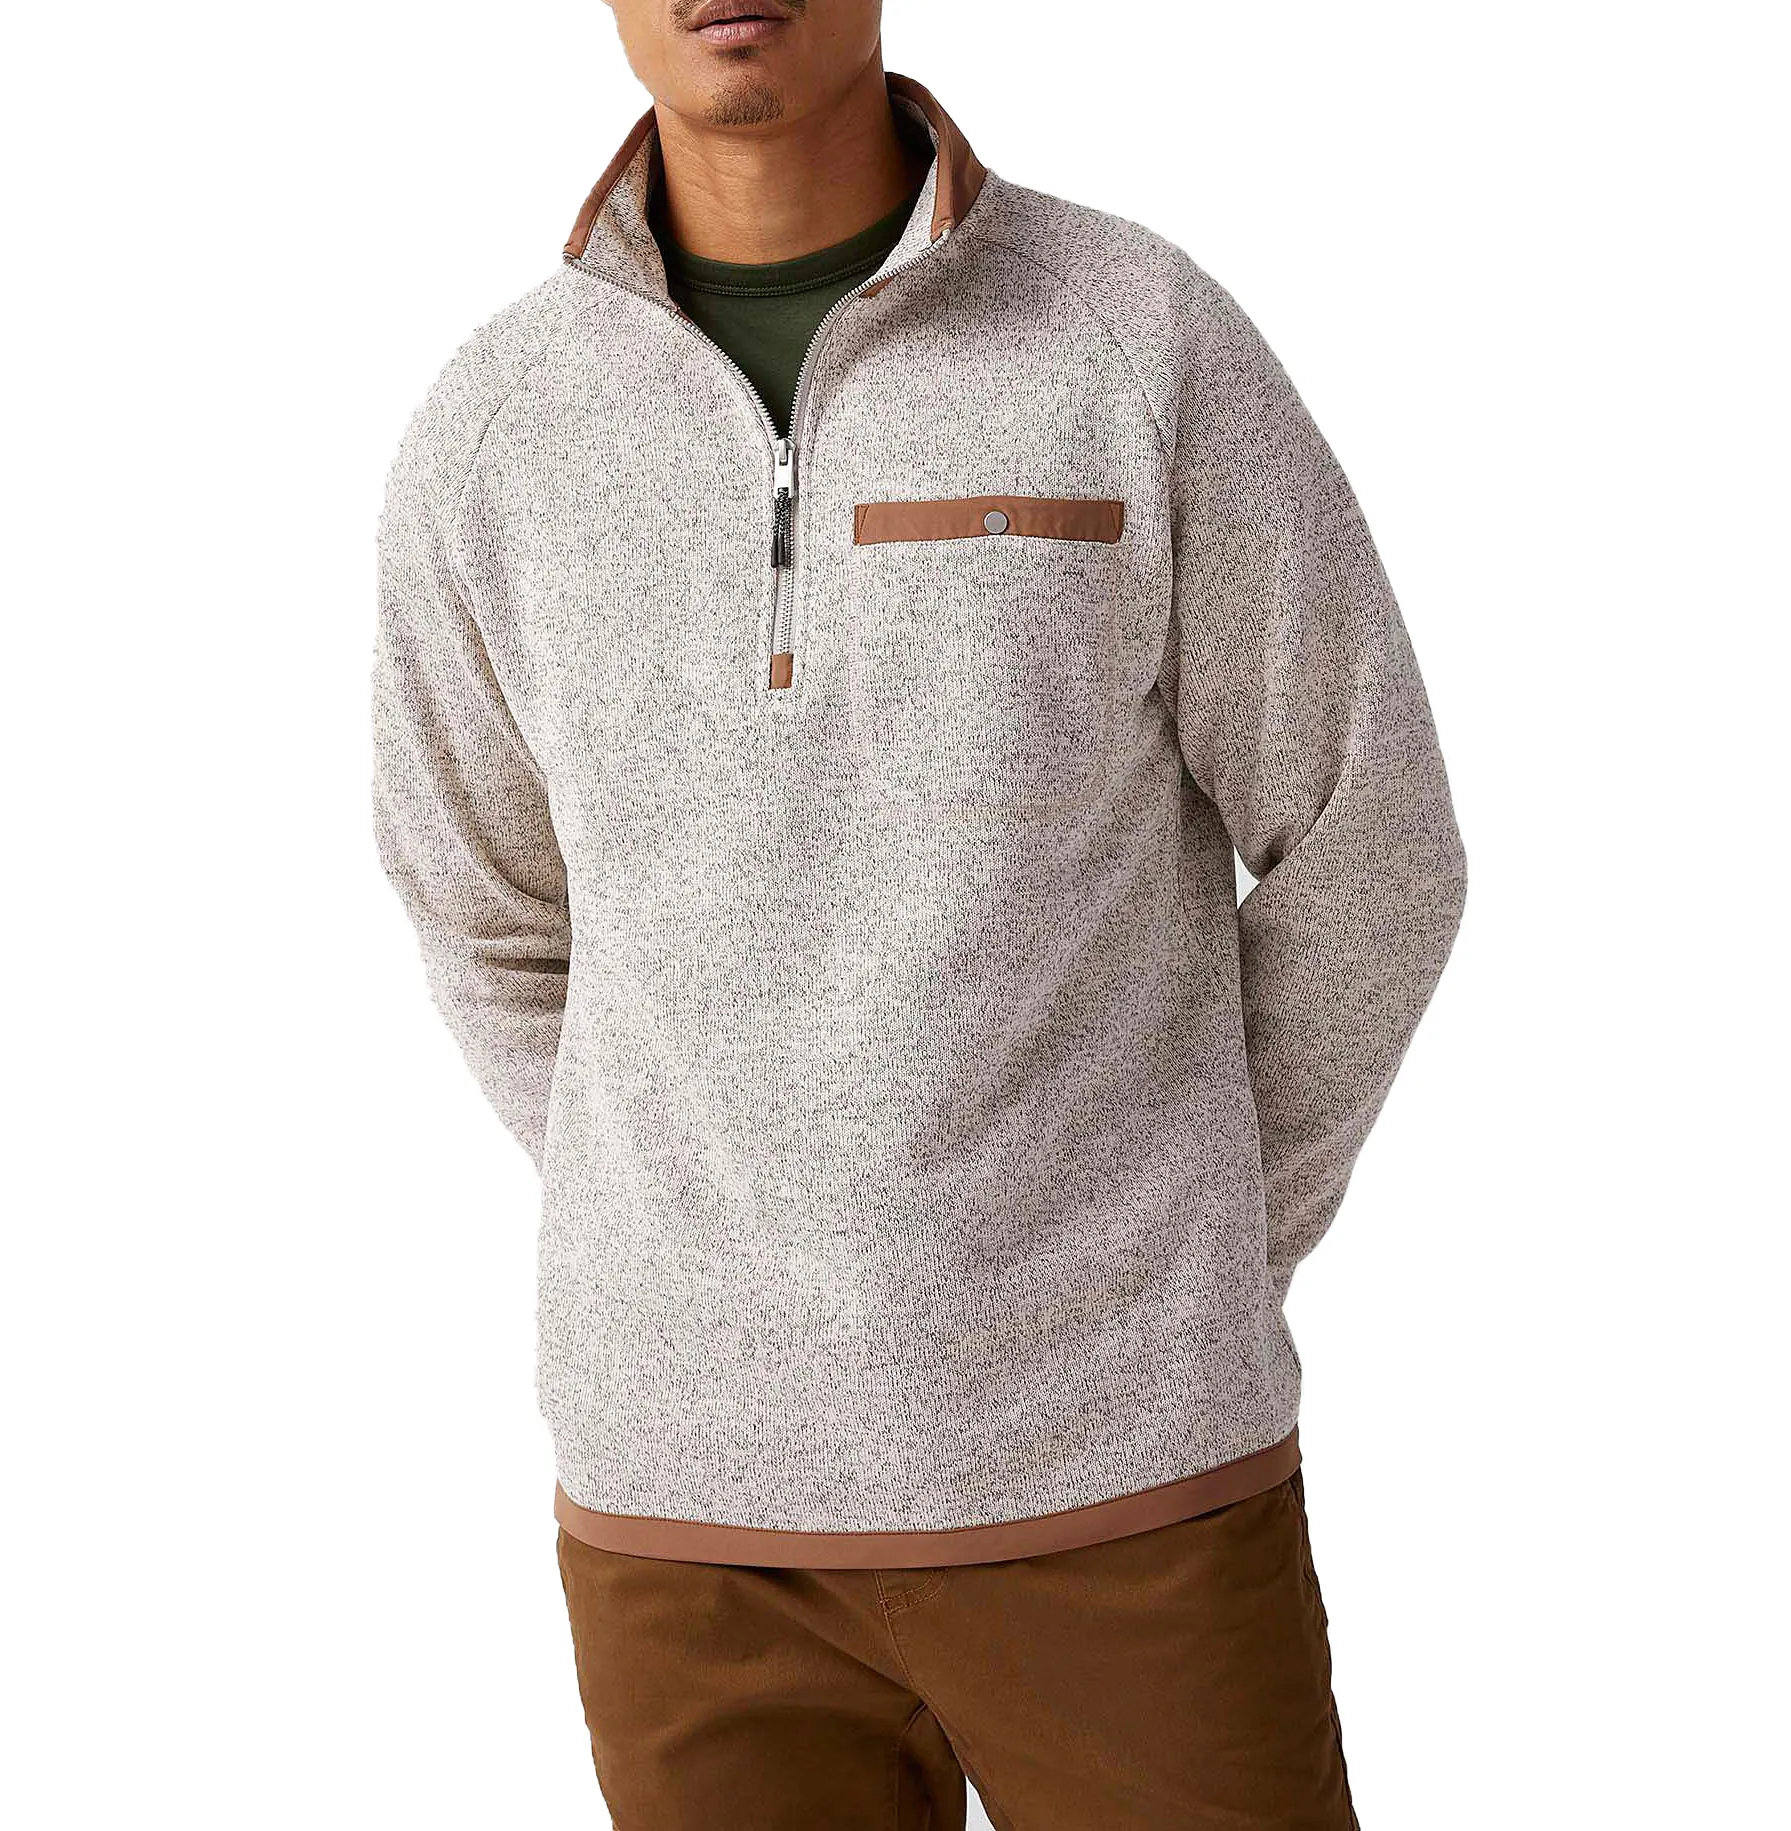 Top Choice Stylish Stand-up Zip Collar Chest Pocket Sweatshirt For Men Warm Cozy Casual Streetwear Customized Men's Sweatshirt